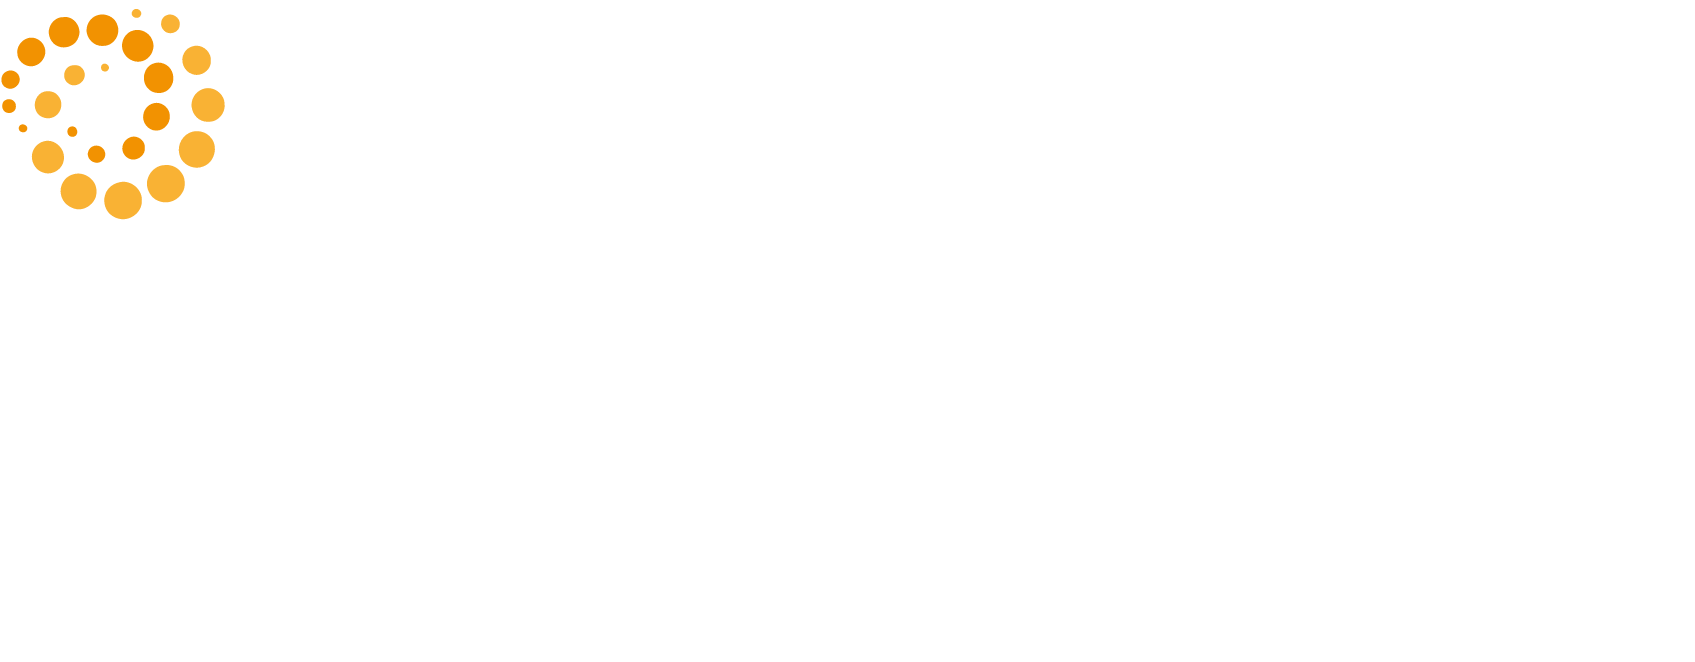 Argo Blockchain logo large for dark backgrounds (transparent PNG)